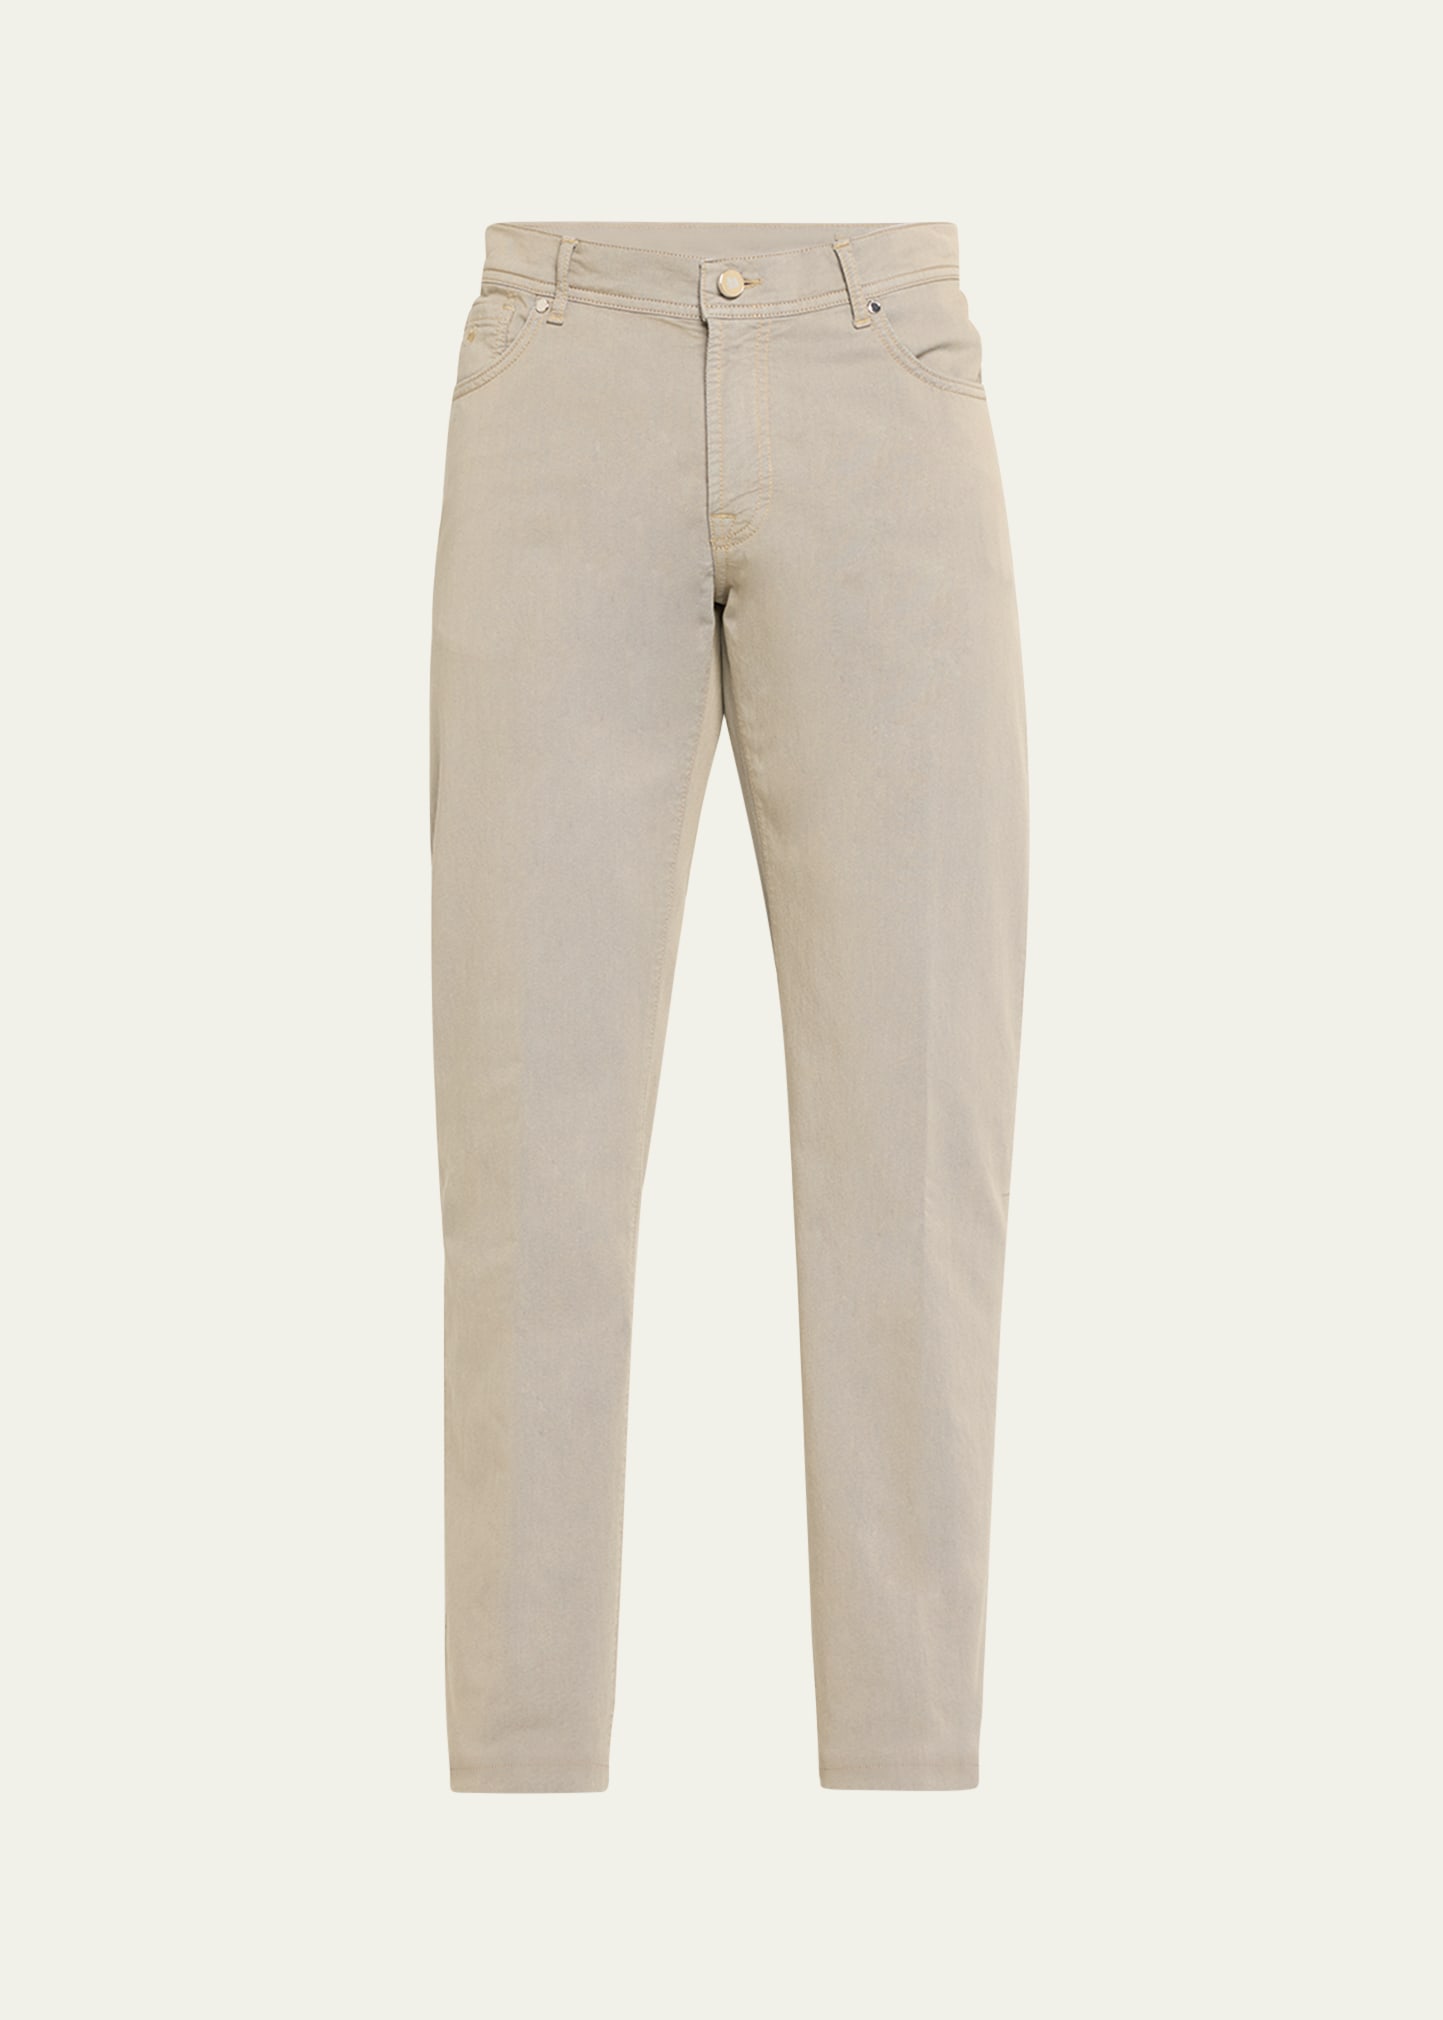 Men's Solaro 5-Pocket Pants